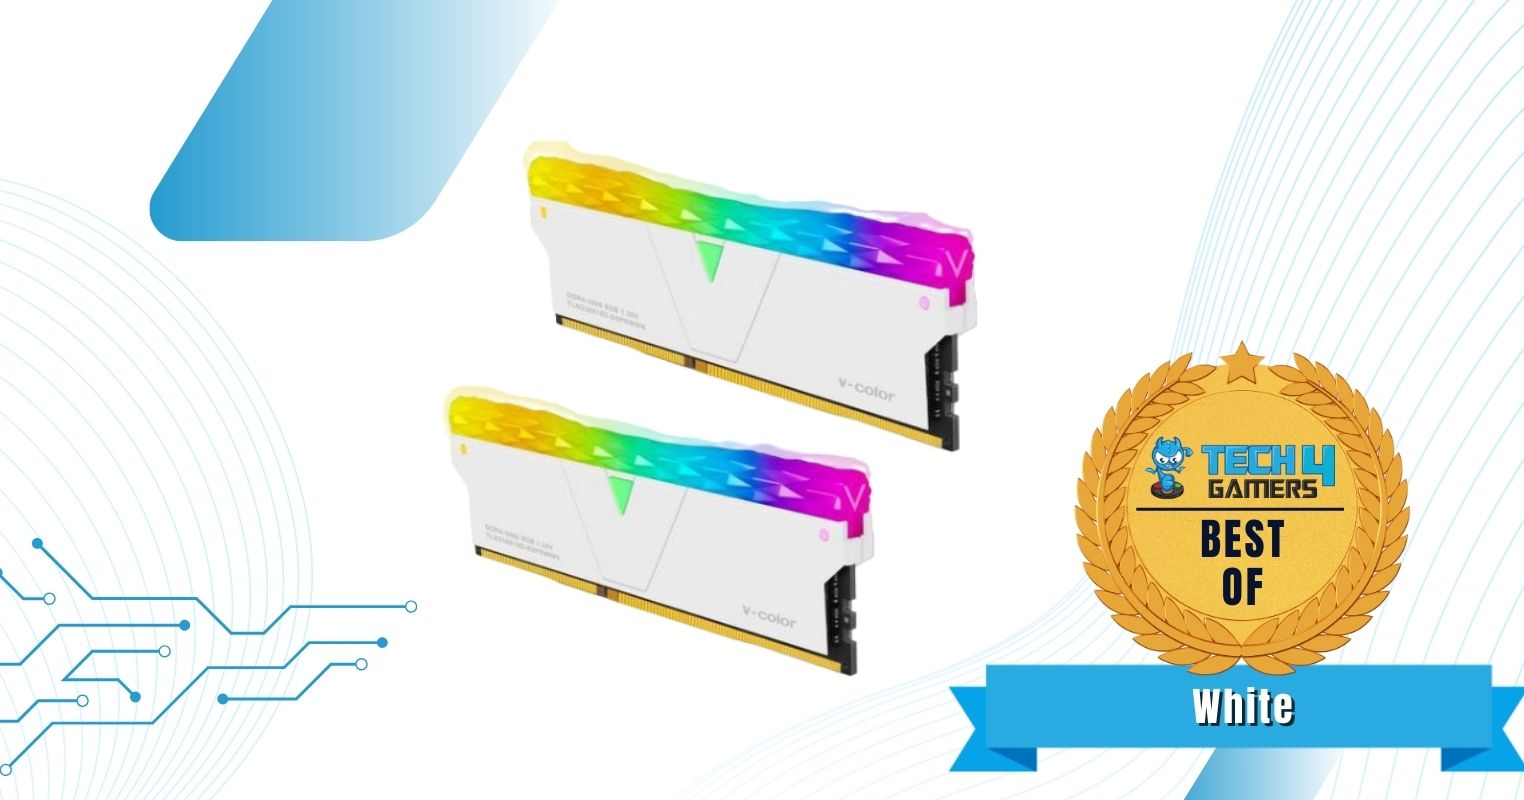 V-Color Prism Pro DDR4 32GB (16GBx2) 3600MHz CL18 - Best White RAM For Ryzen 7 5700X3D